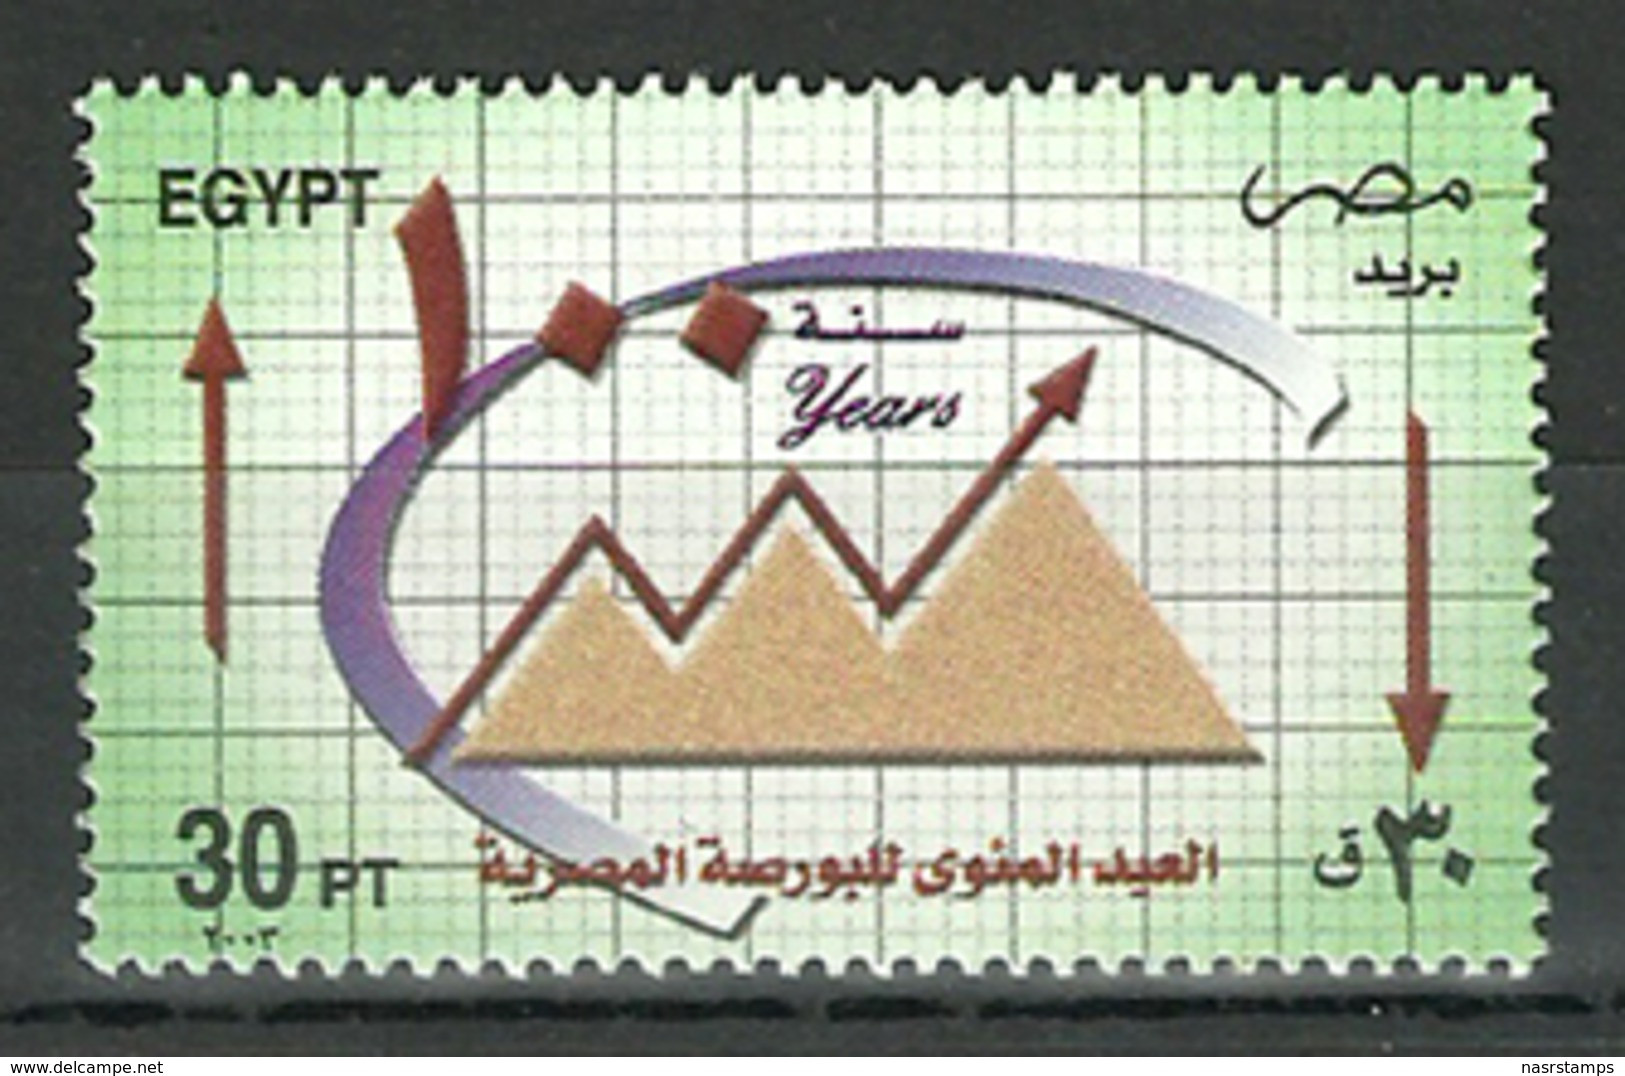 Egypt - 2003 - ( Cairo Bourse, Cent. ) - MNH (**) - Nuevos